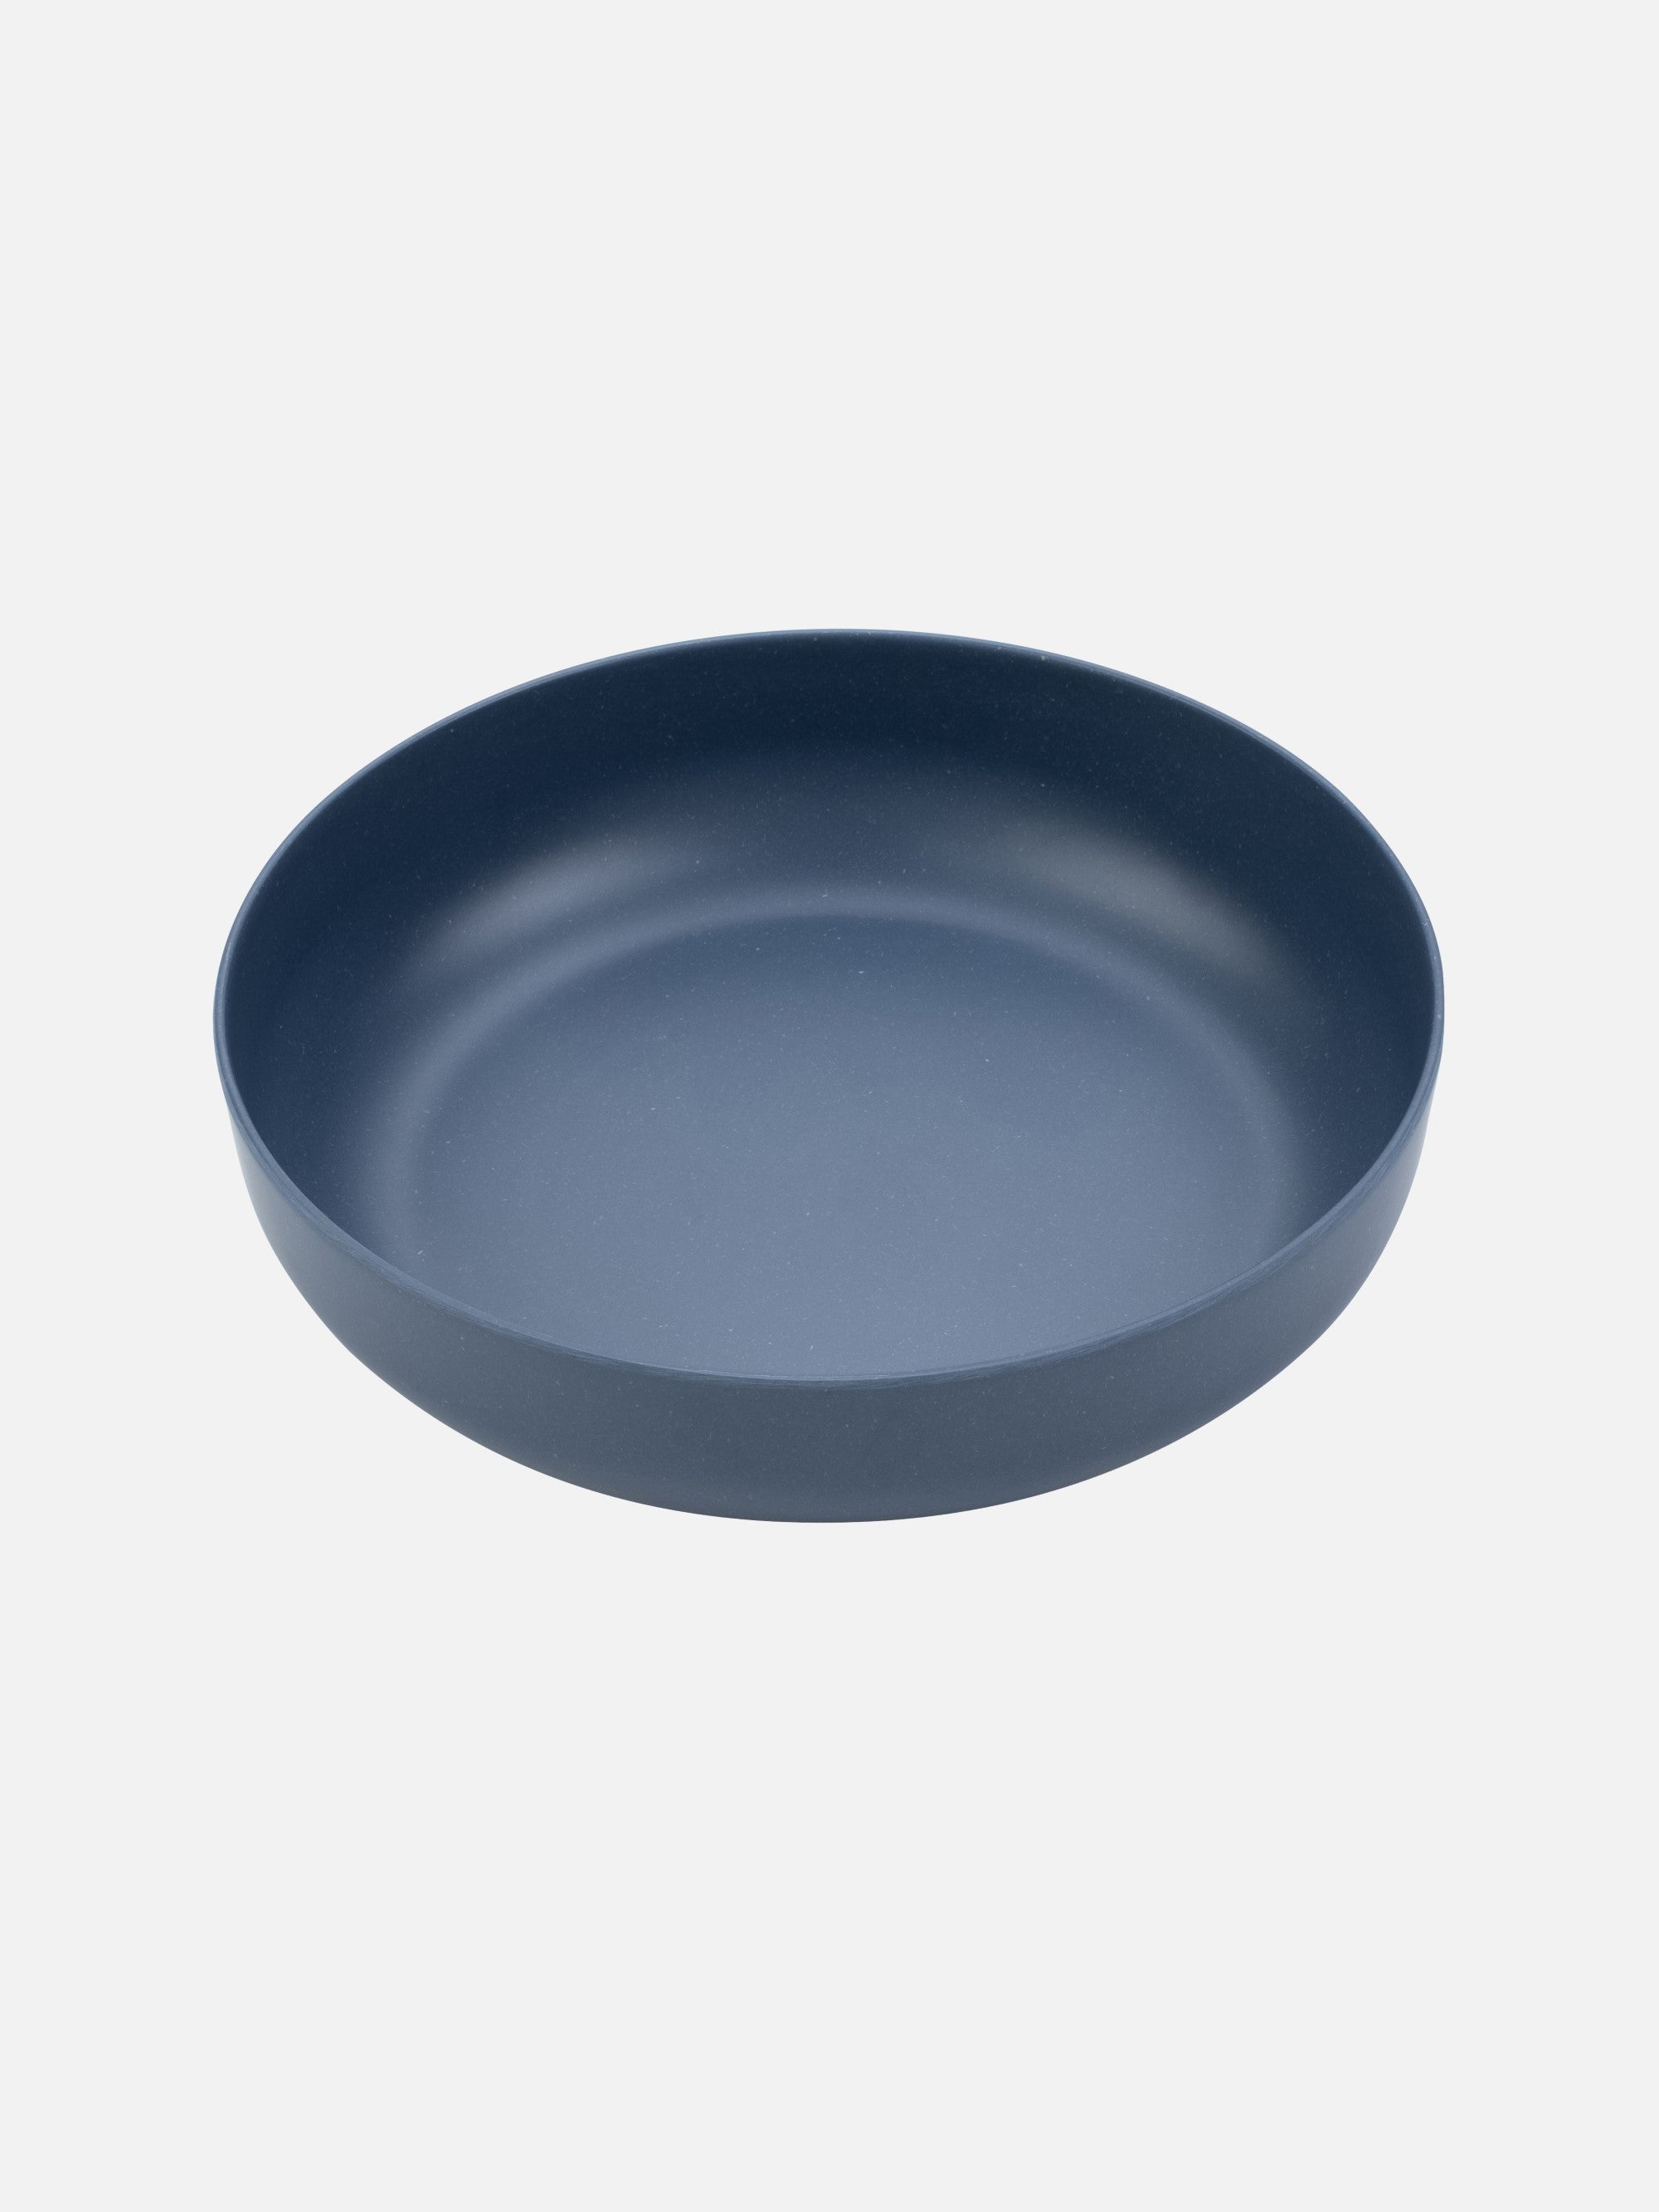 Serving Bowls - Buy Serving Bowls Online At Best Prices